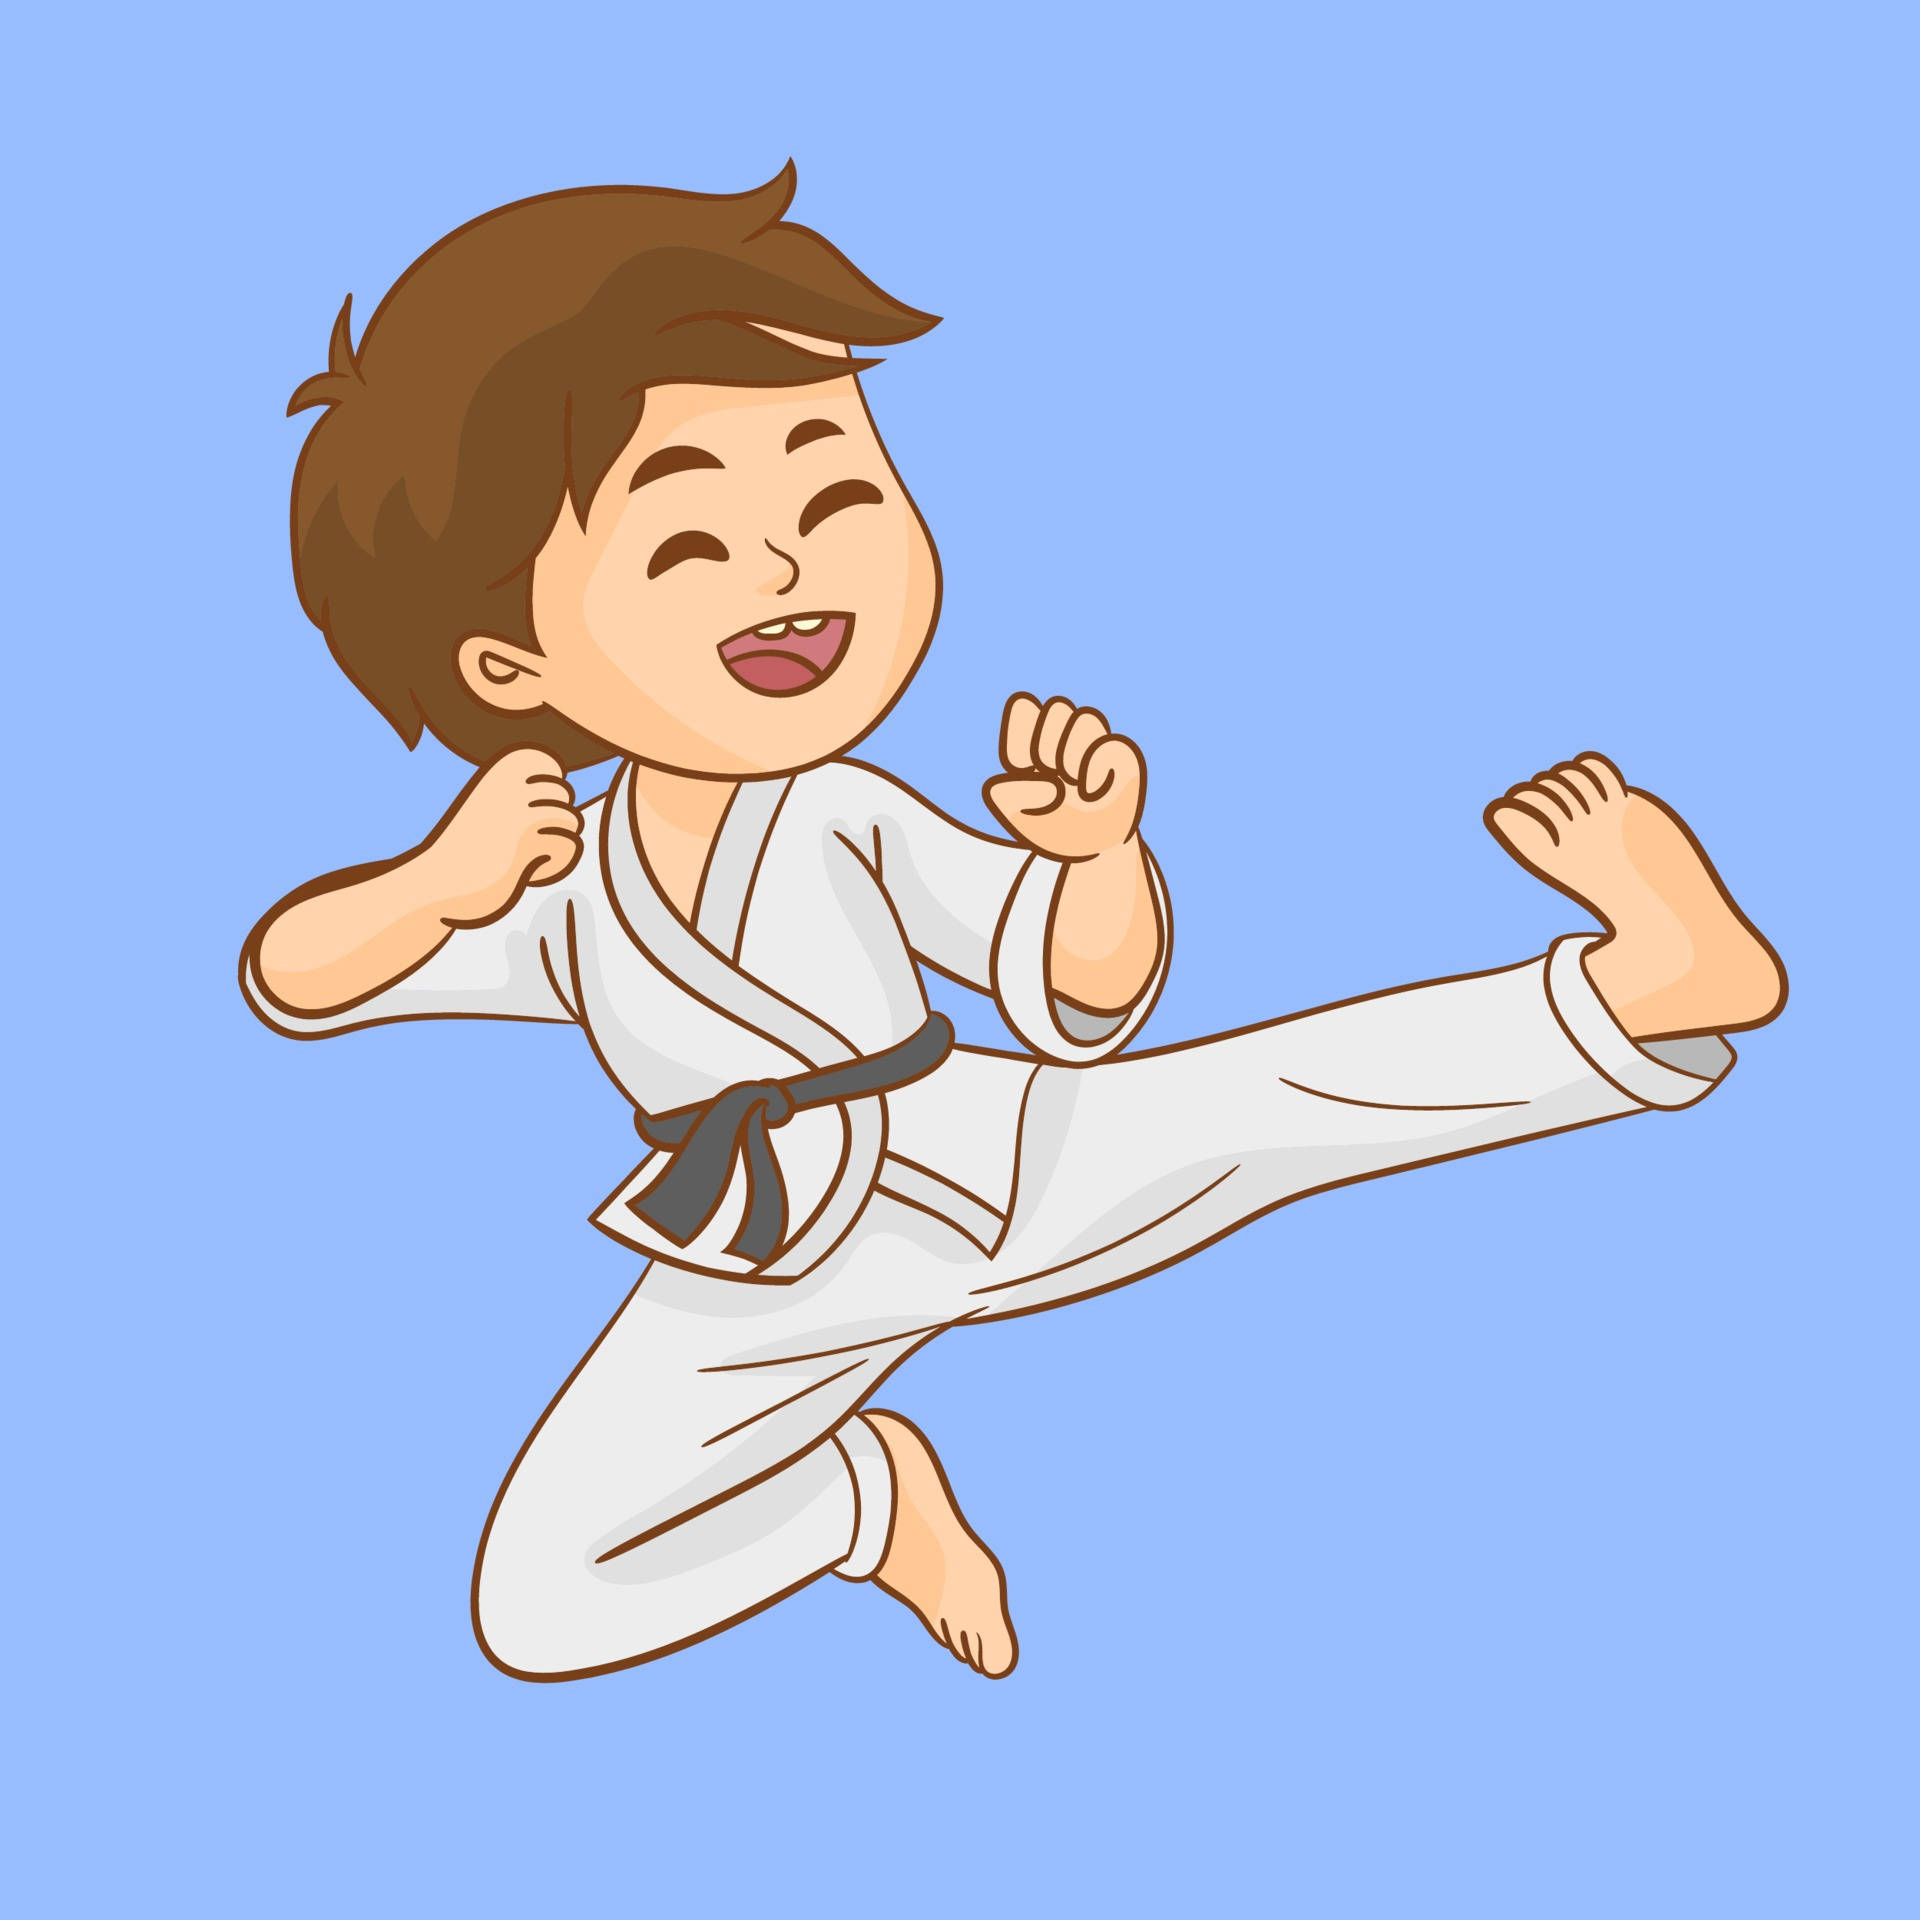 Download Karate Kick Cute Cartoon Wallpaper | Wallpapers.com